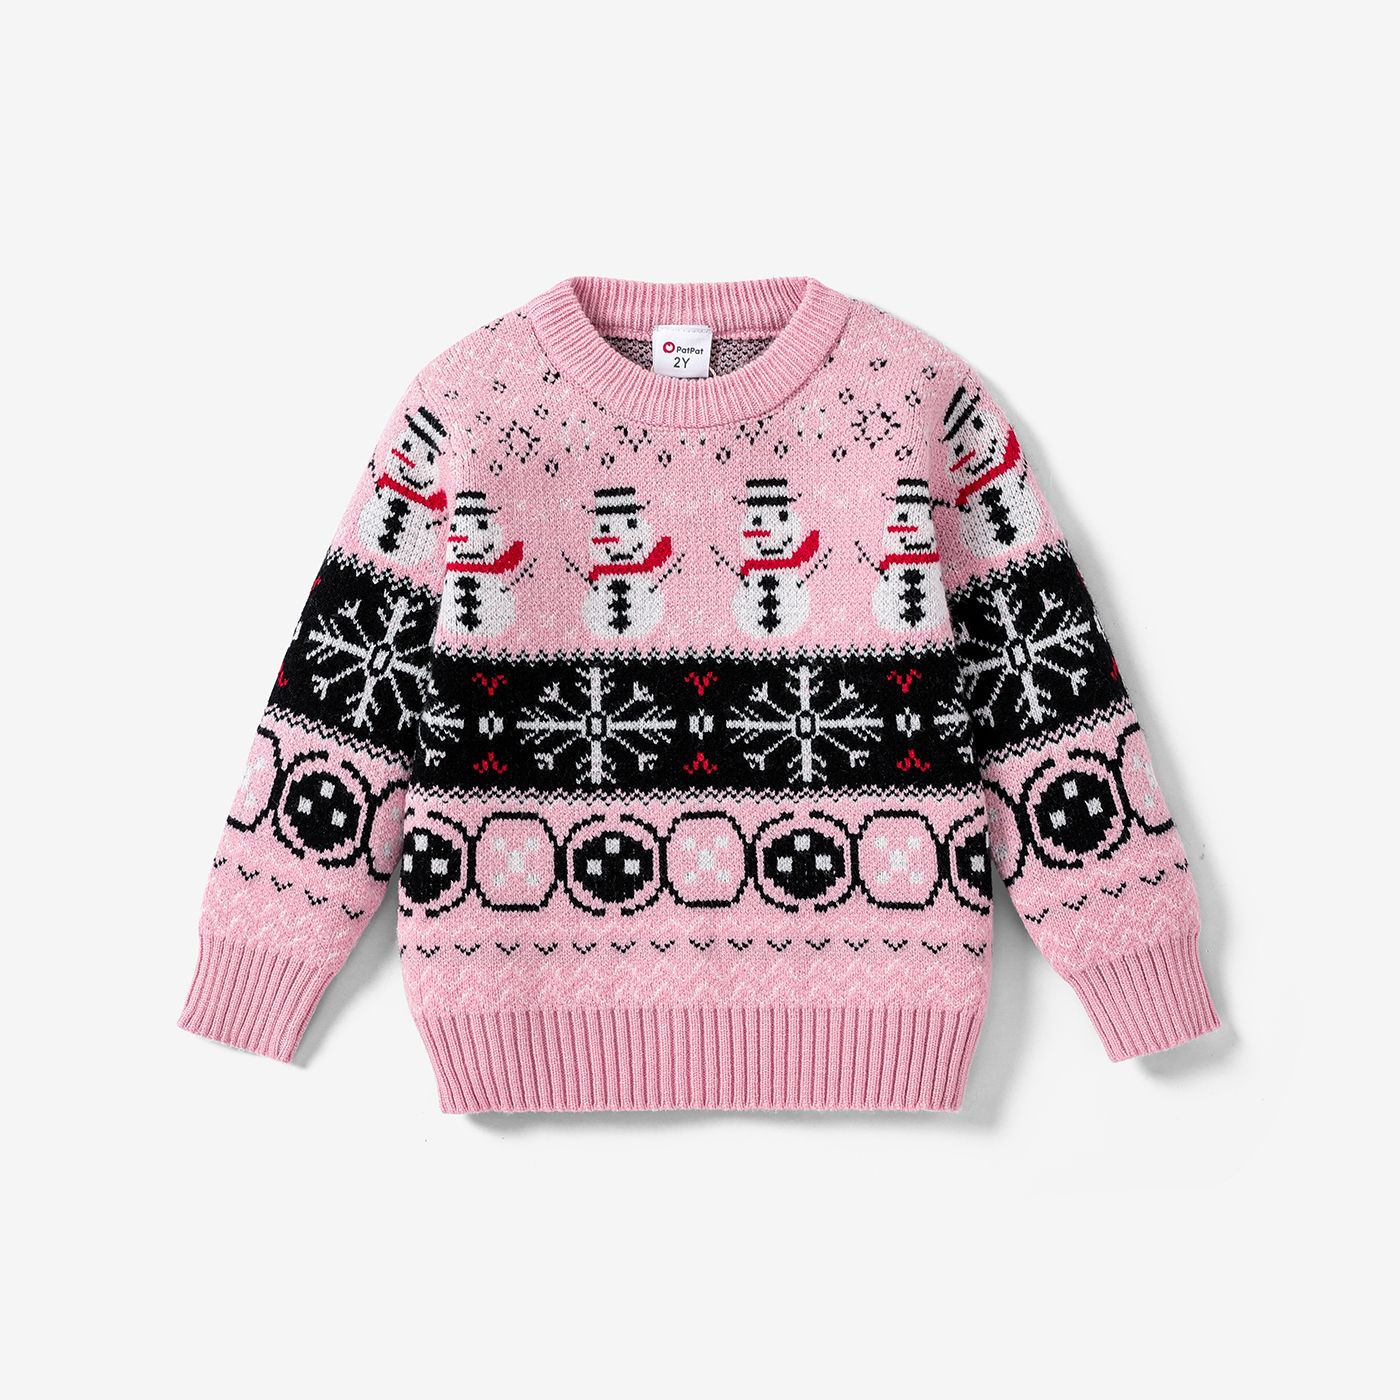 Toddler Boy/Girl Christmas Snowman Pattern Sweater